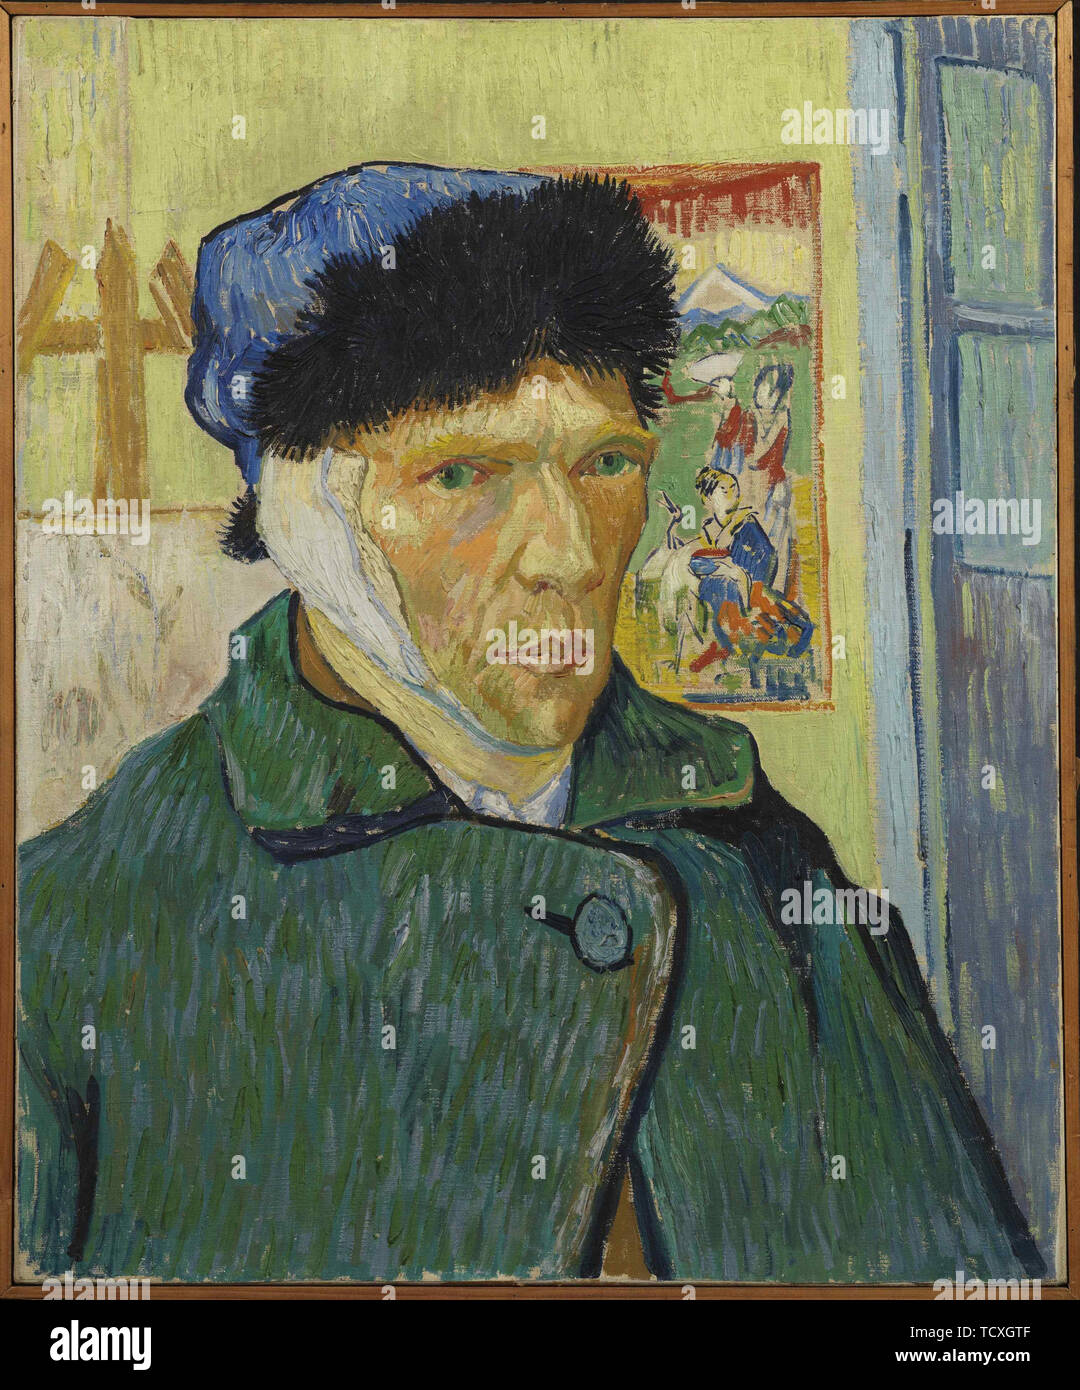 Autoportrait à l'oreille bandée (Autoritratto con orecchio bendato), 1889. Creatore: Gogh, Vincent van (1853-1890). Foto Stock